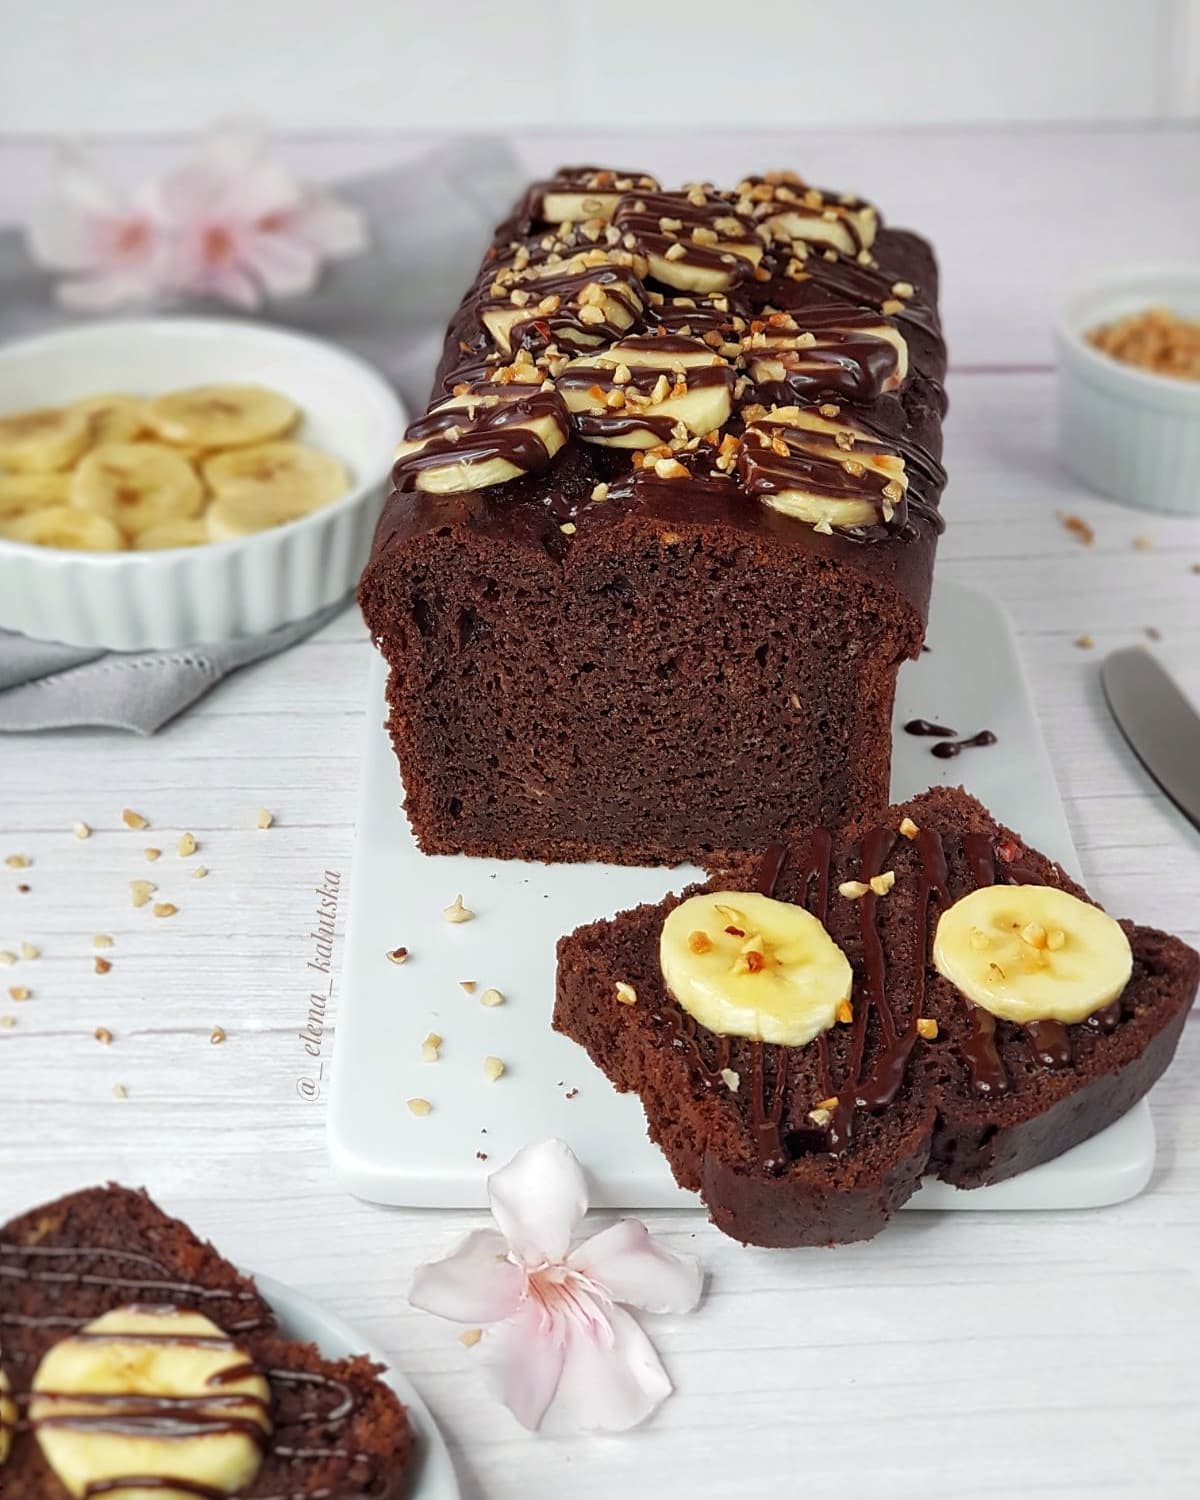 Chocolate & banana loaf cake